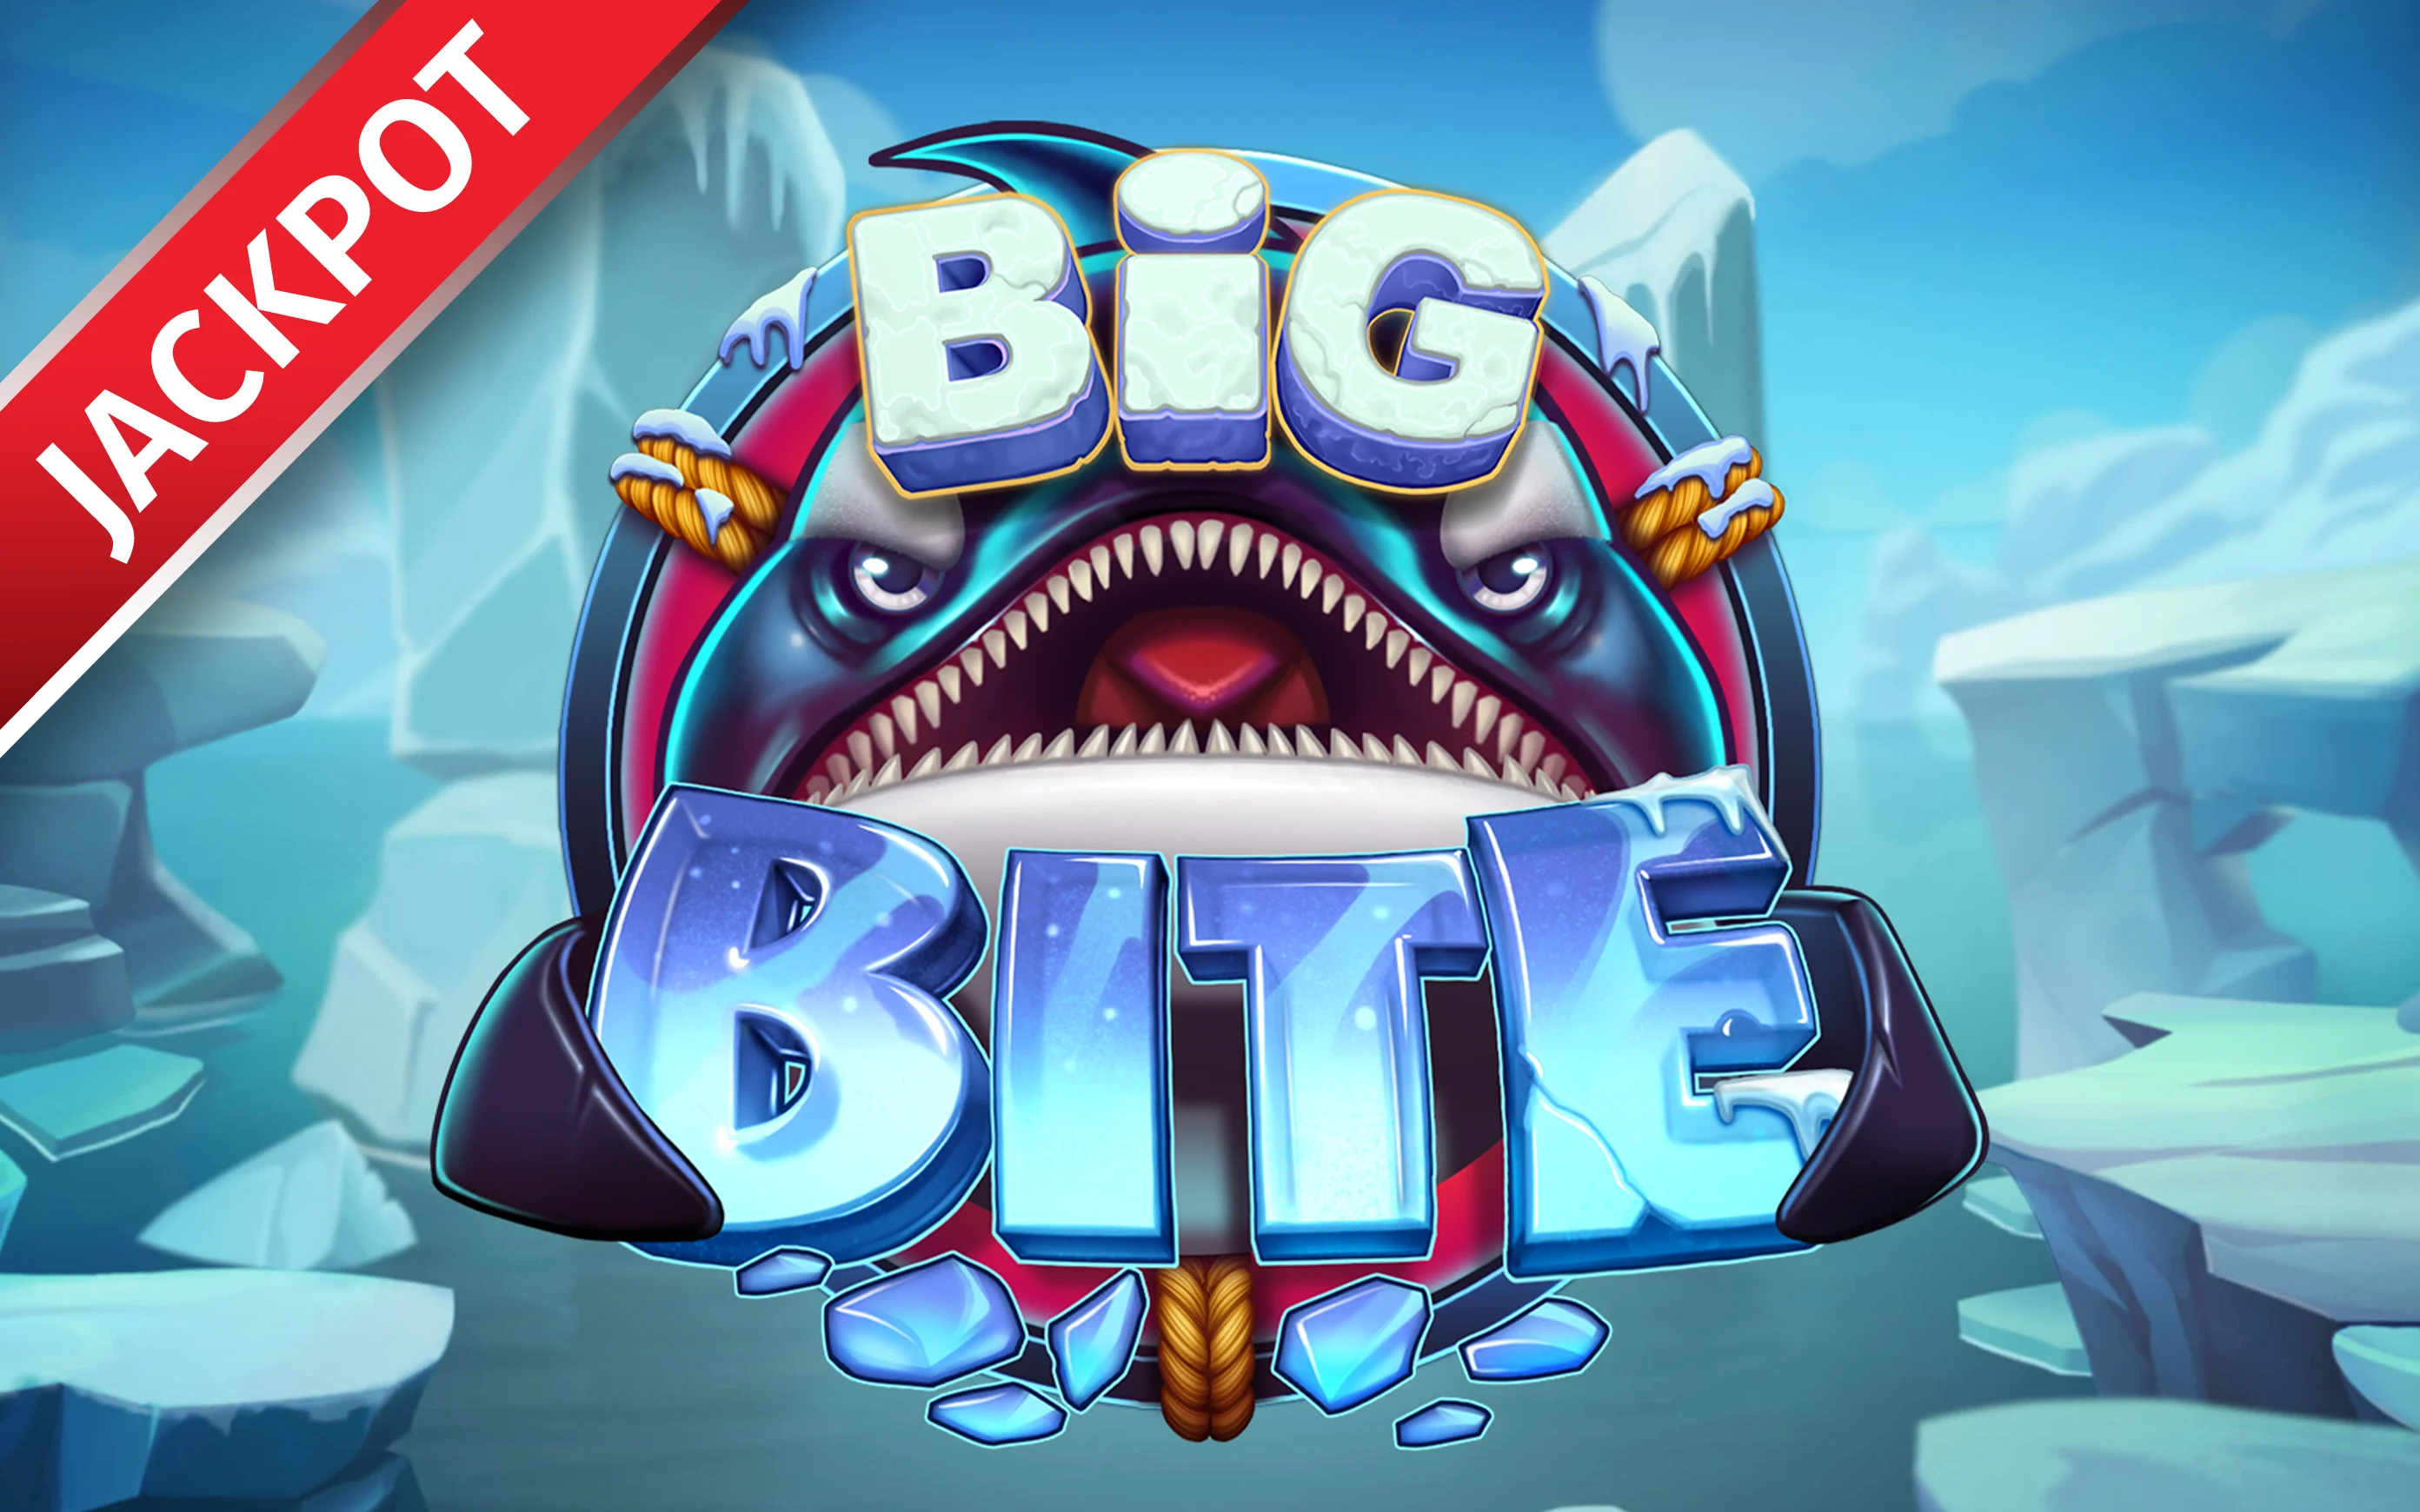 Грайте у Big Bite в онлайн-казино Starcasino.be